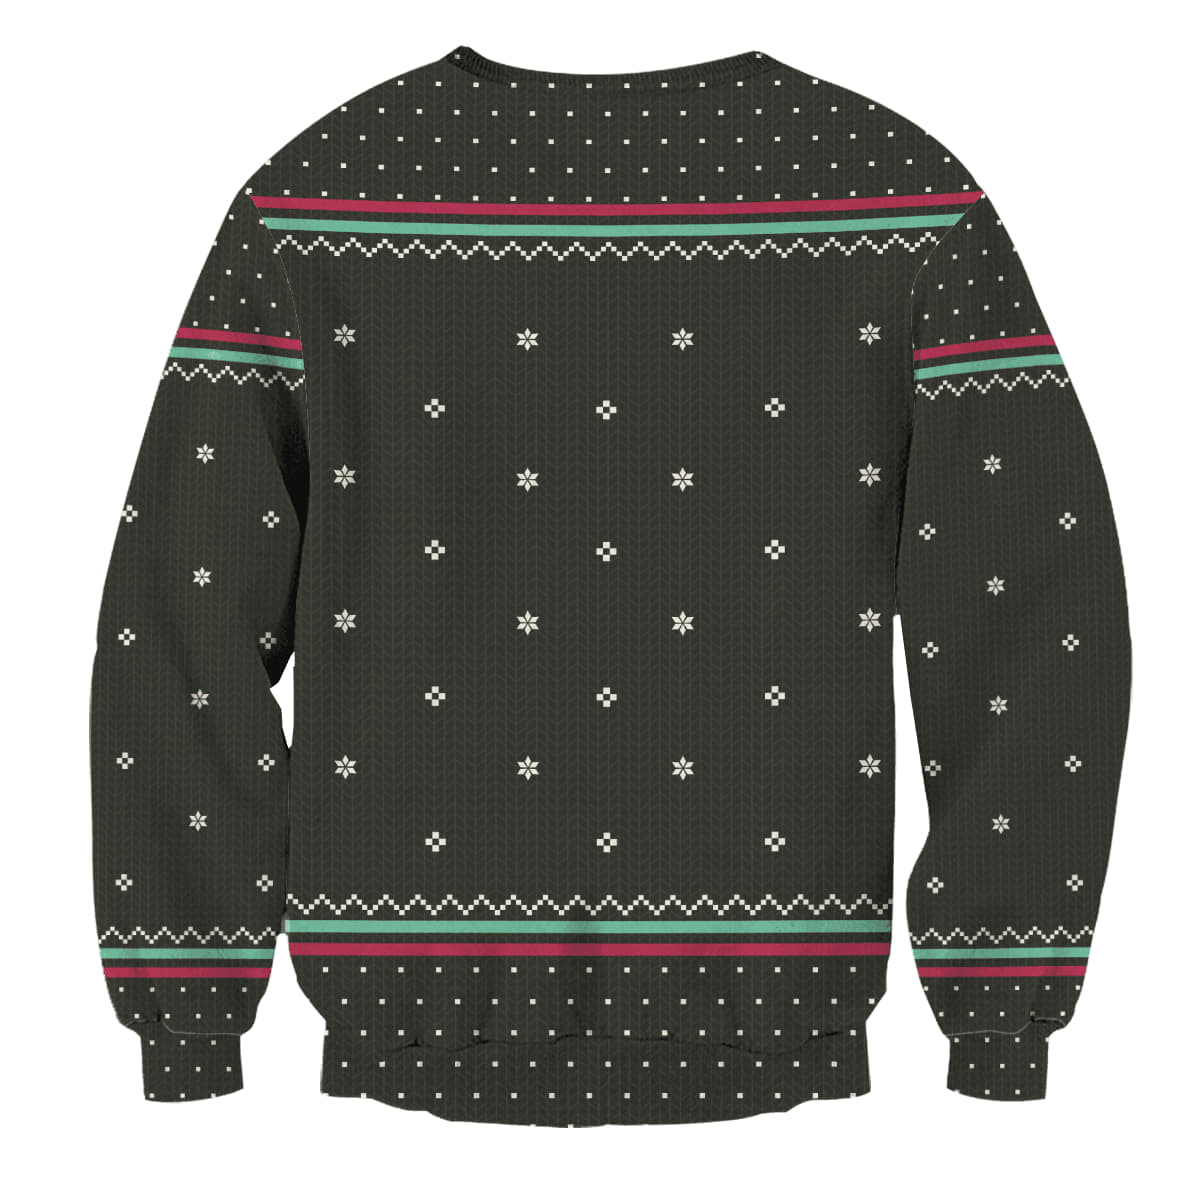 Do You Wanna Build A Snowman Wool Knitted Sweater, Frozen All Over Print Sweatshirt